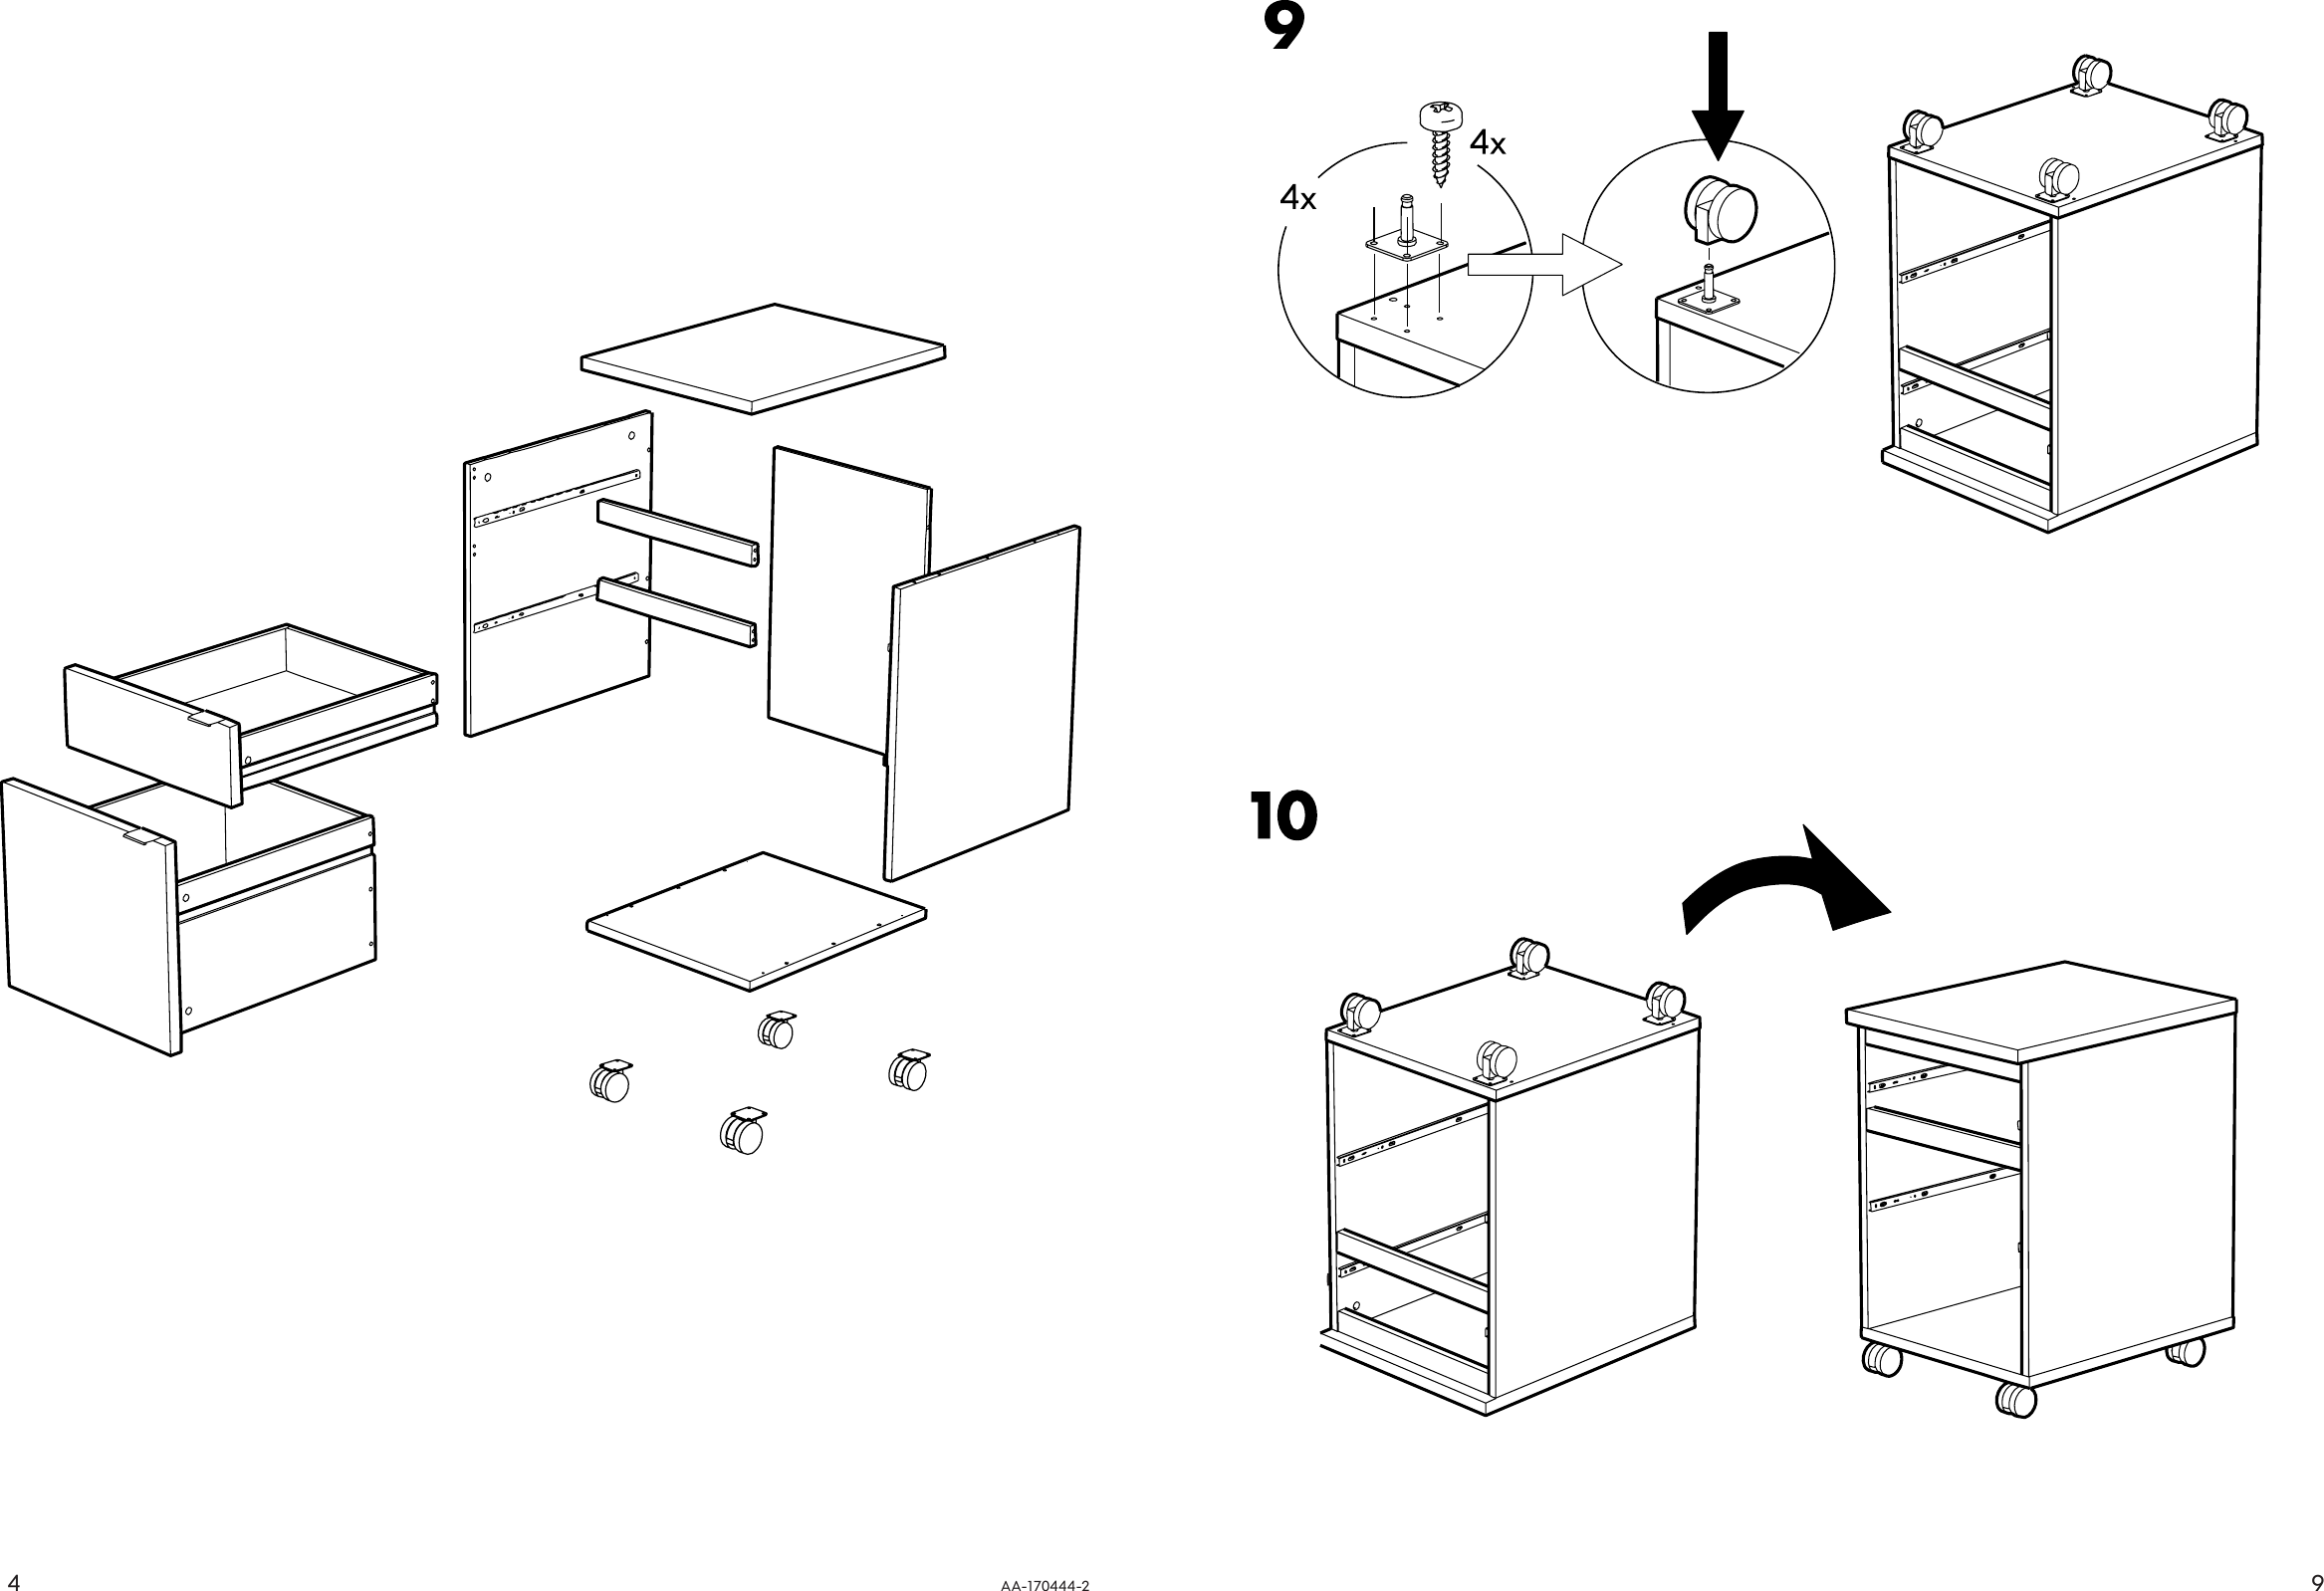 Page 4 of 6 - Ikea Ikea-Jonas-Drawer-Unit-W-Casters-16X20-Assembly-Instruction-2  Ikea-jonas-drawer-unit-w-casters-16x20-assembly-instruction